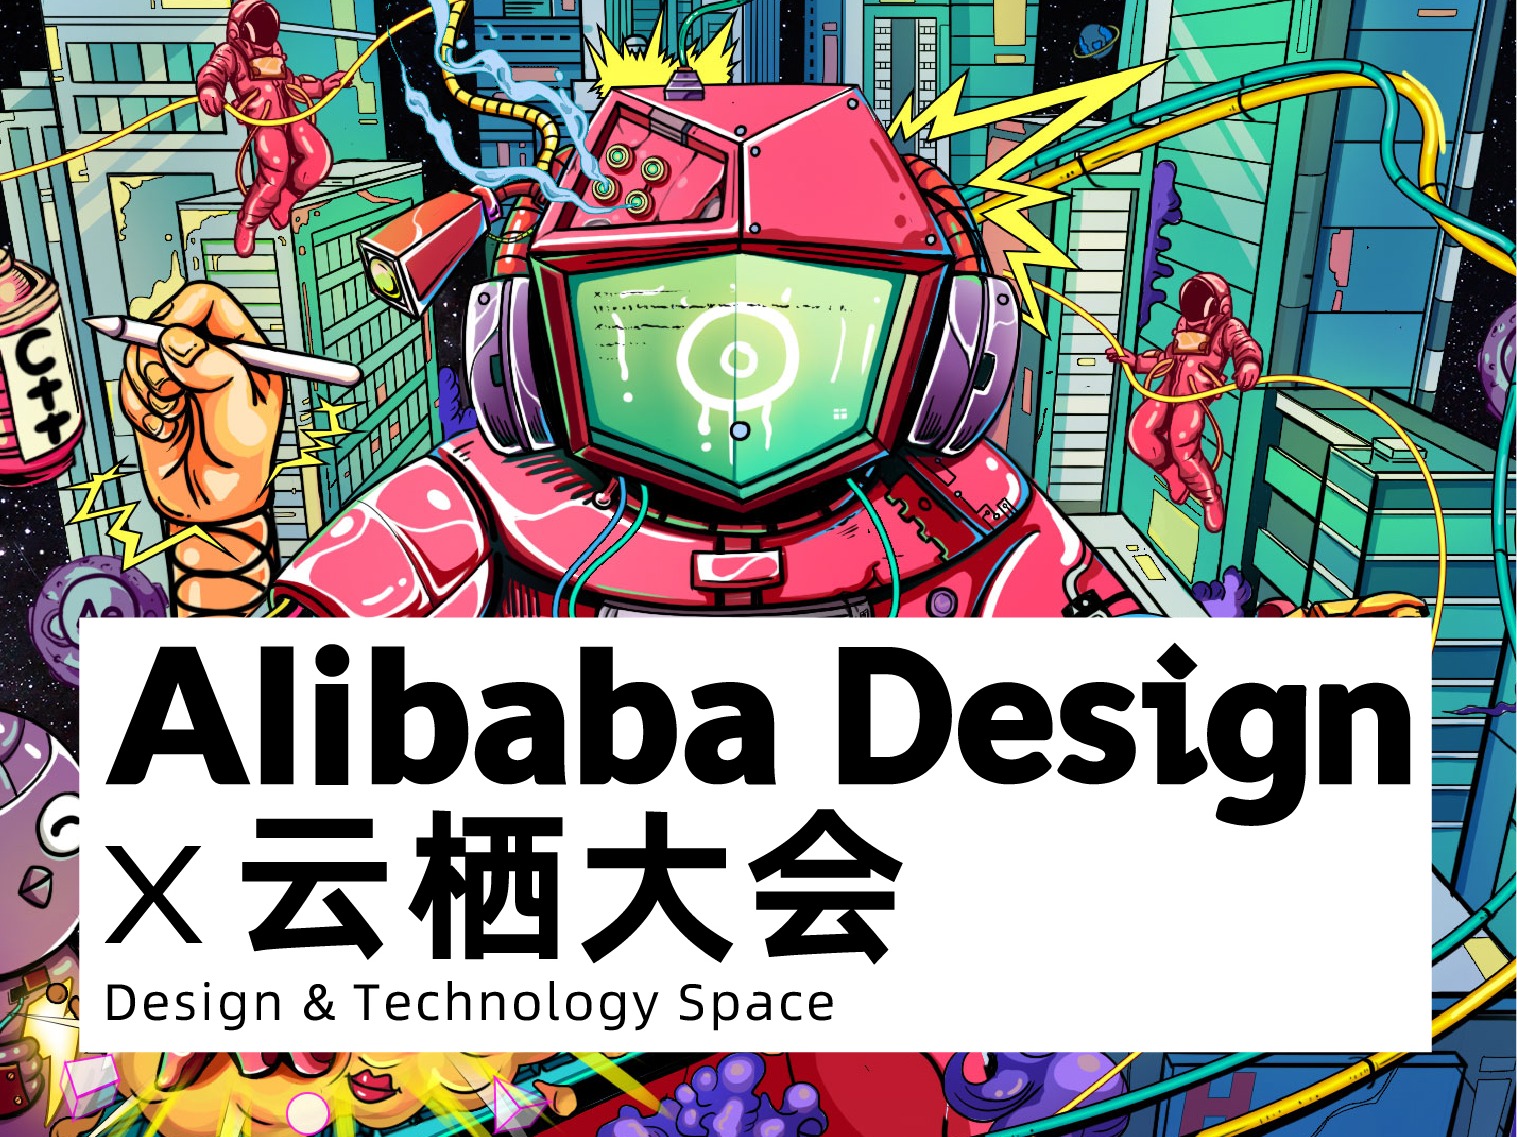 #Alibaba Design x 云栖大会#-设计&技术空间